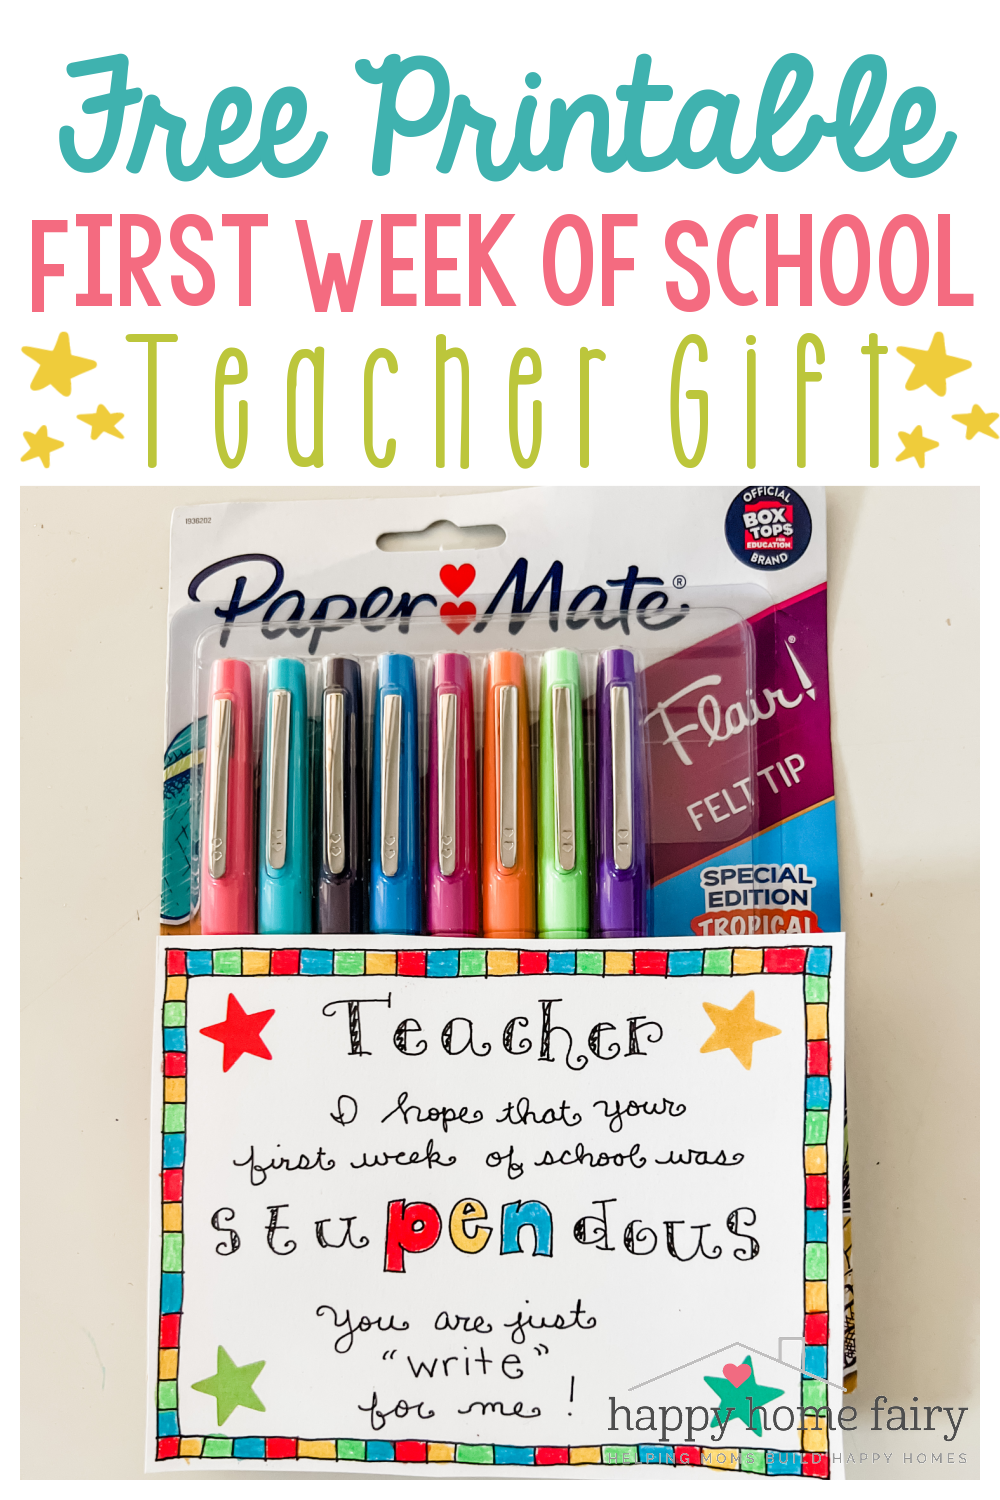 First Week of School Teacher Gift - FREE Printable - Happy Home Fairy